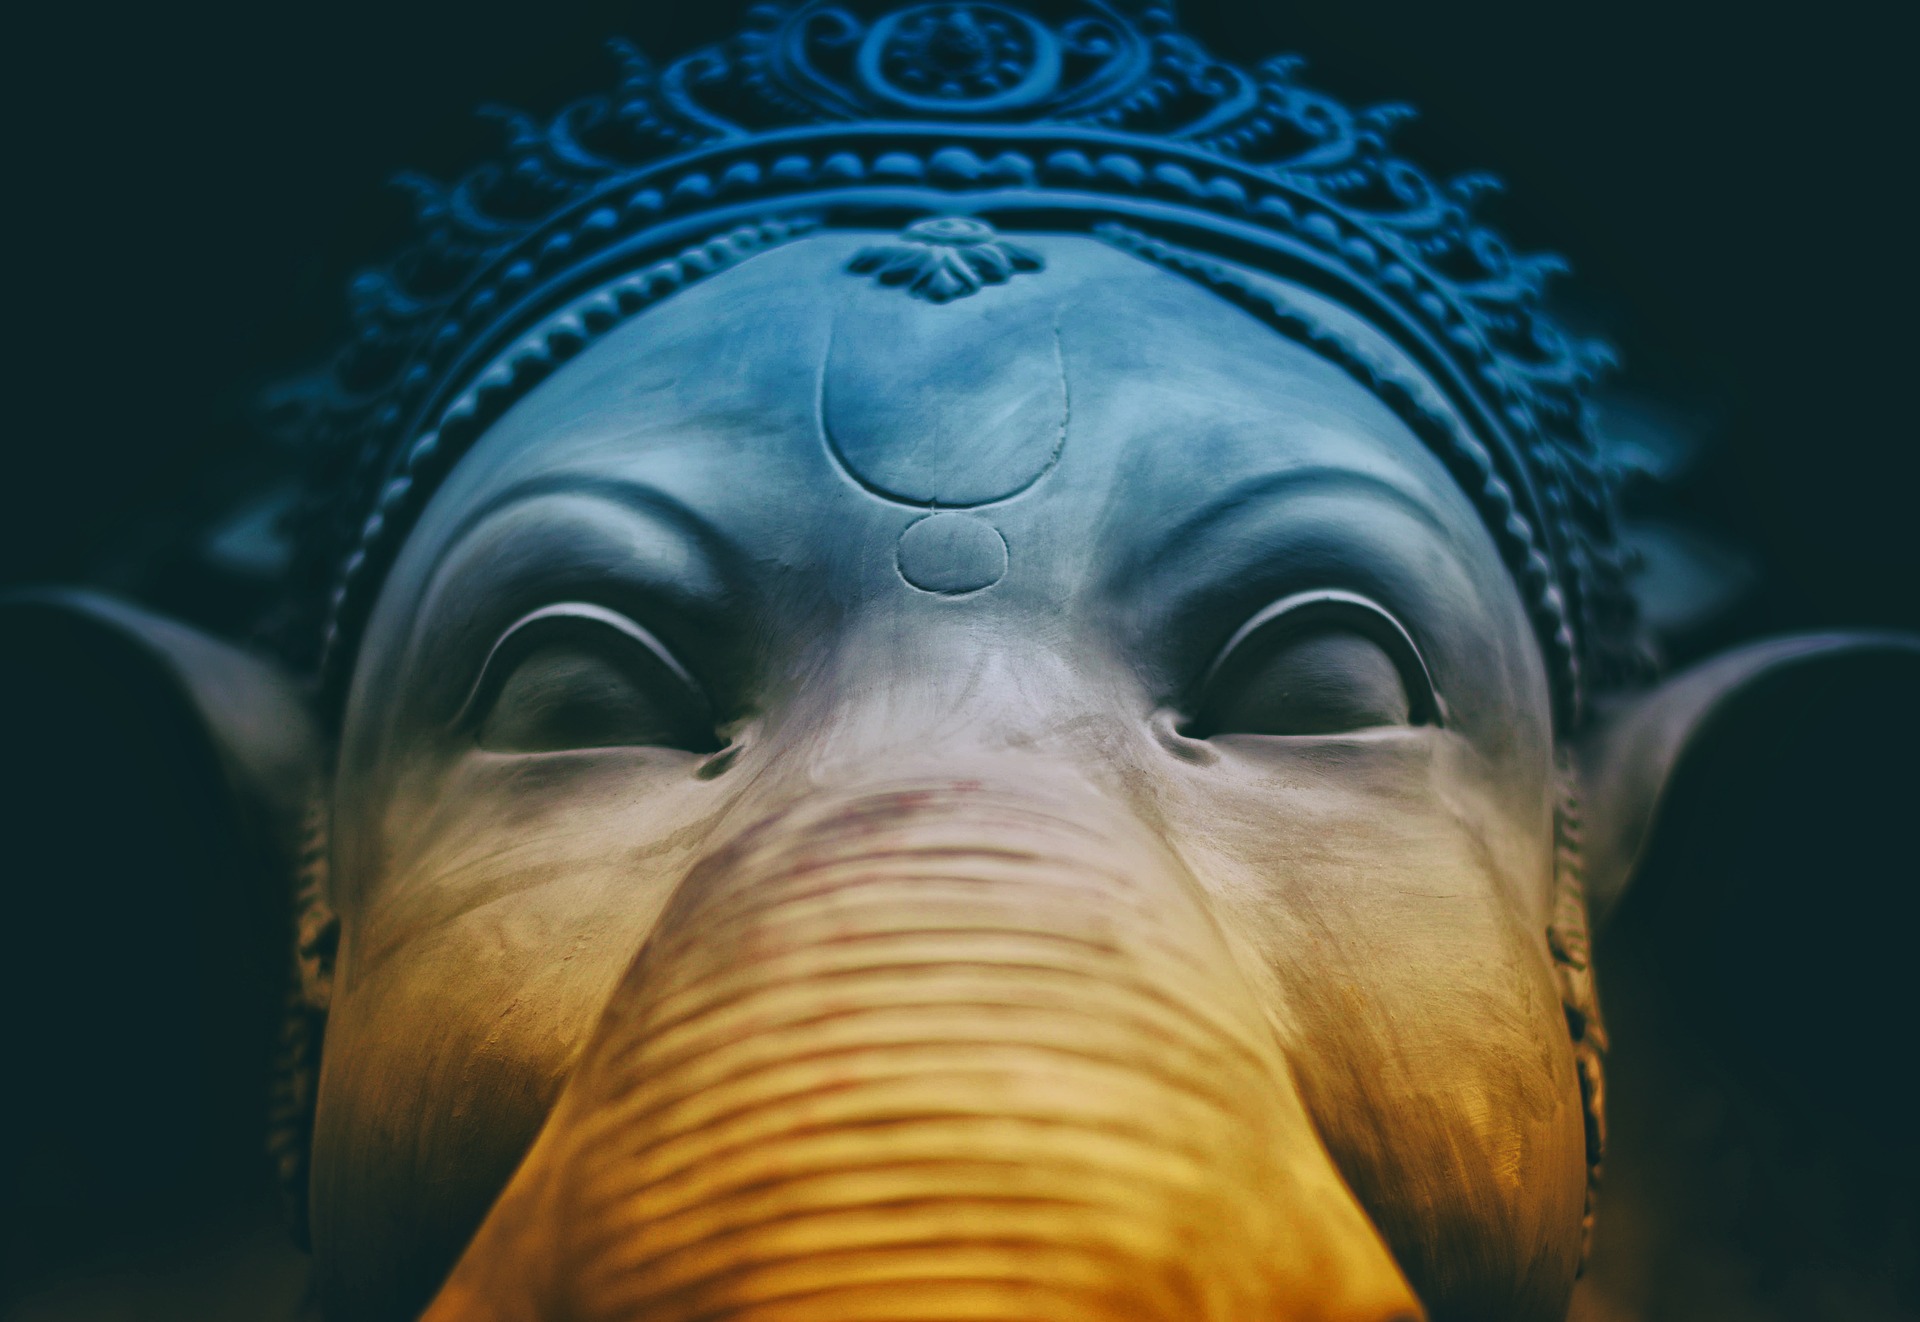 Understanding Ganesh